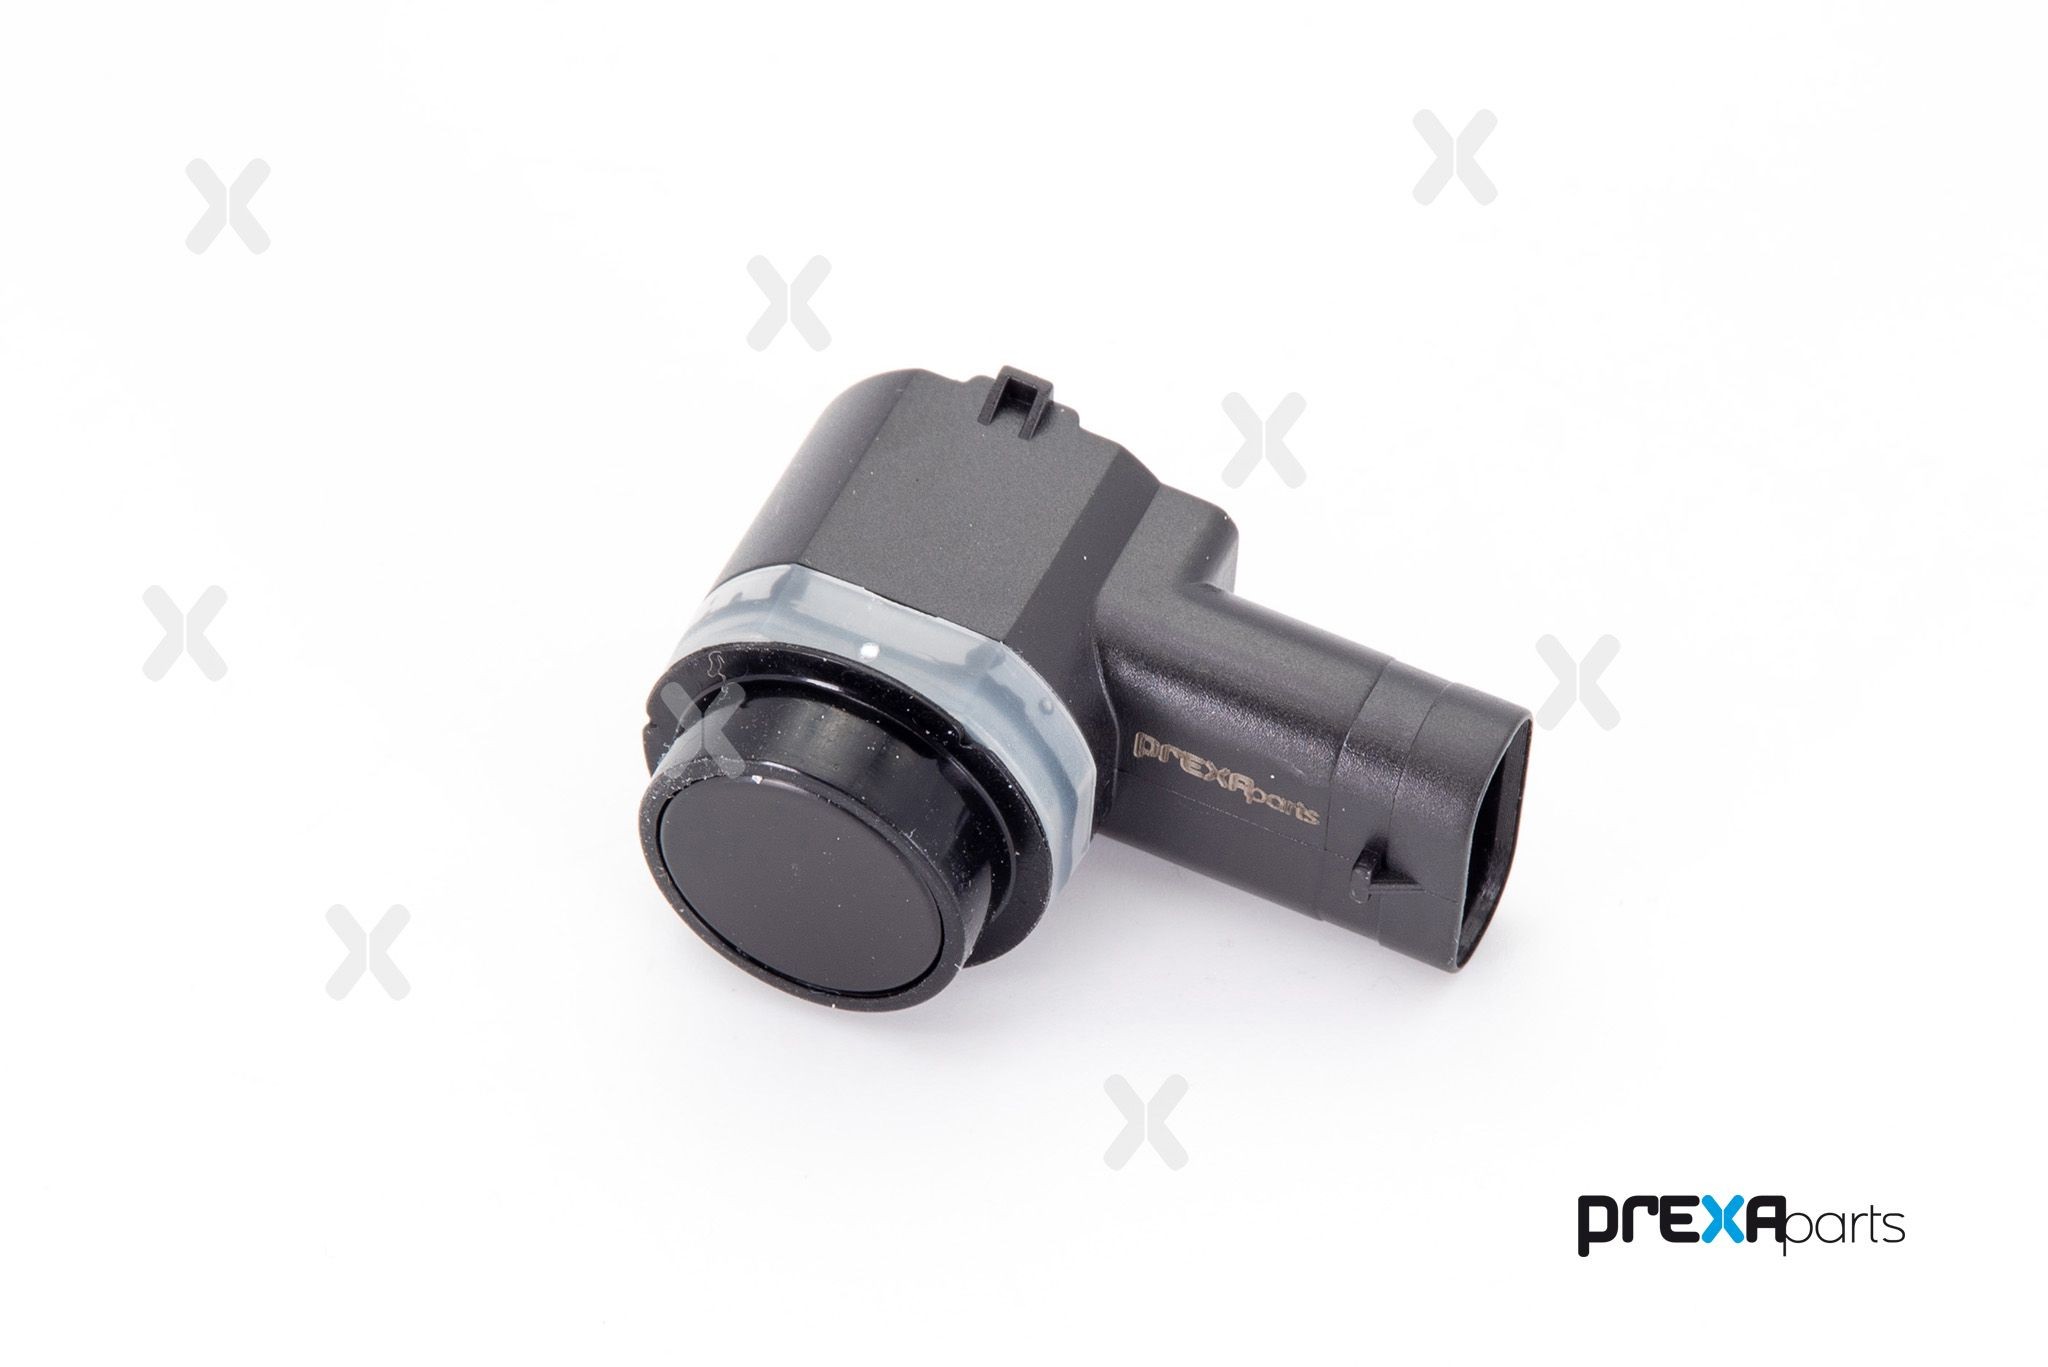 PREXAparts P603008 Parking sensor LR039635